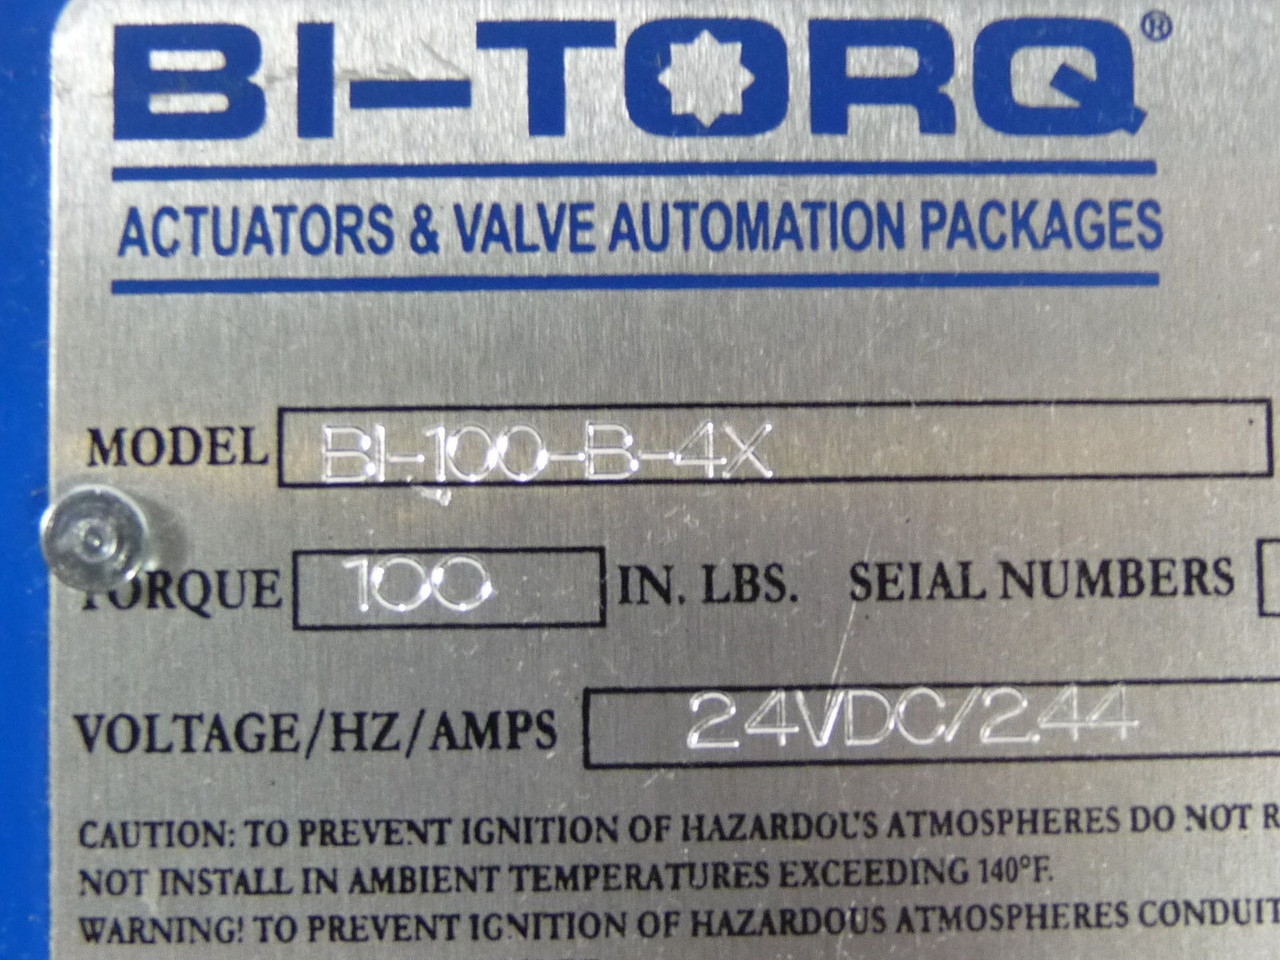 Bi-Torq BI-100-B4X Electric Actuator 24VDC 100 Torque w/ 1-1/4" Valve USED